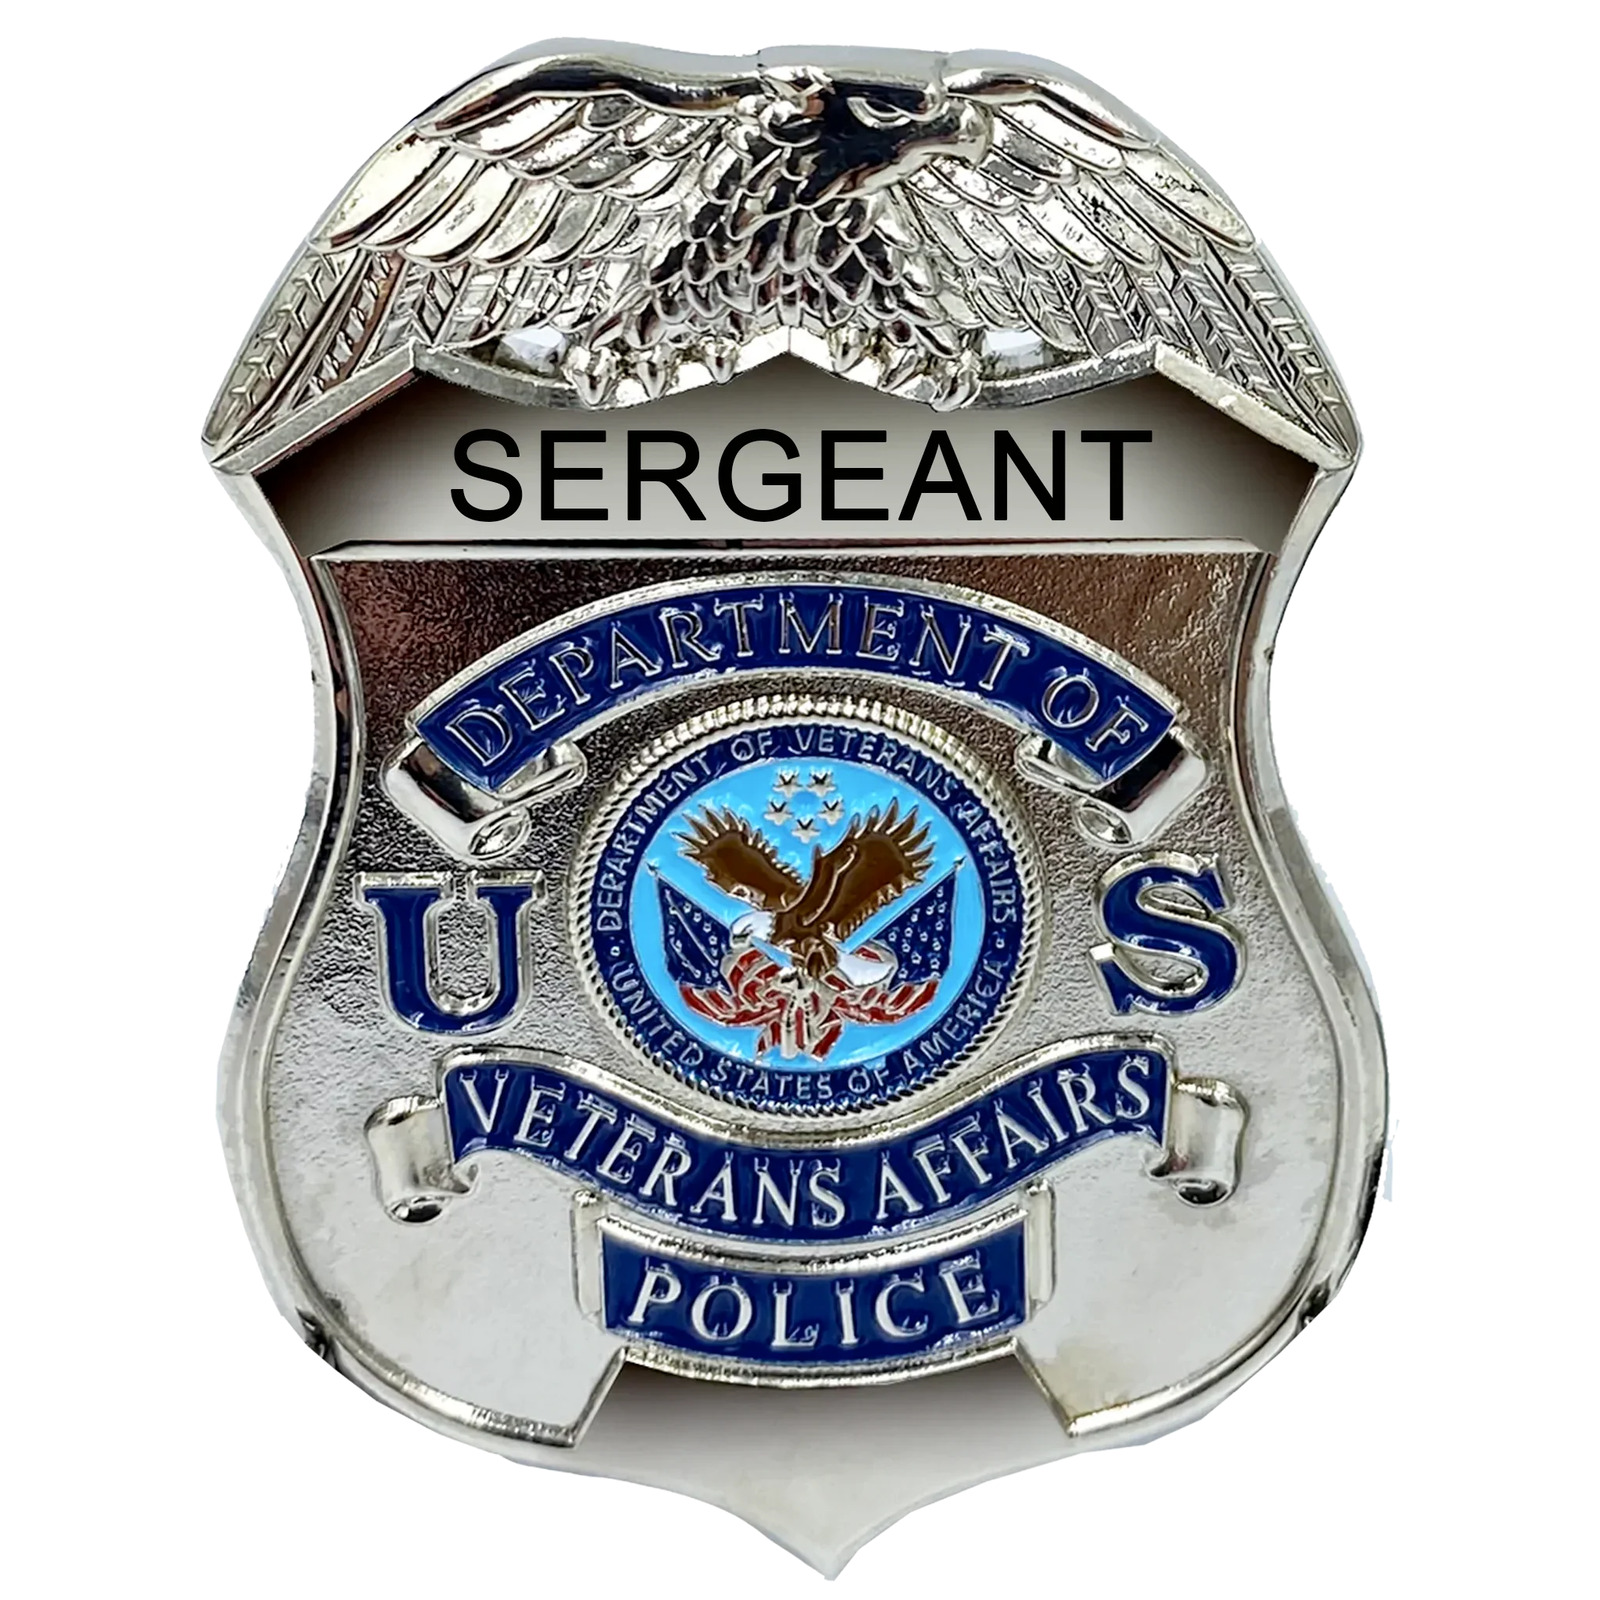 PBX-004-G VA Veterans Affairs Administration lapel pin for SERGEANT Police Offic